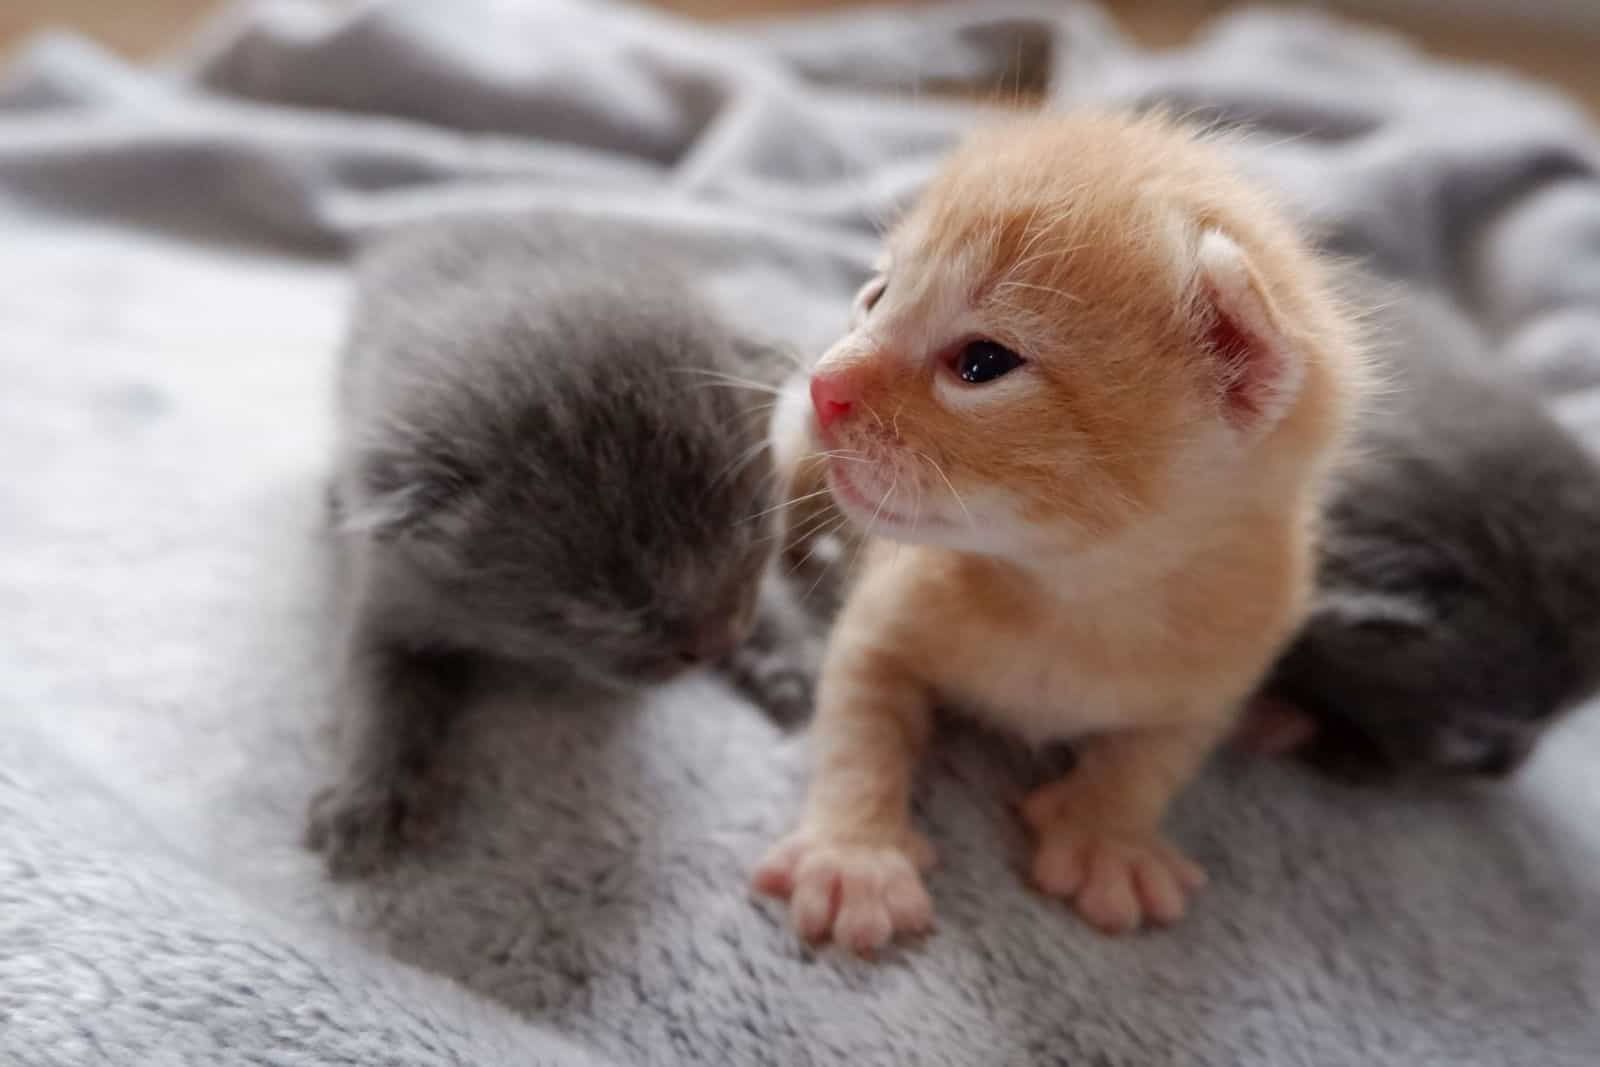 Newborn kittens learn to open their eyes.